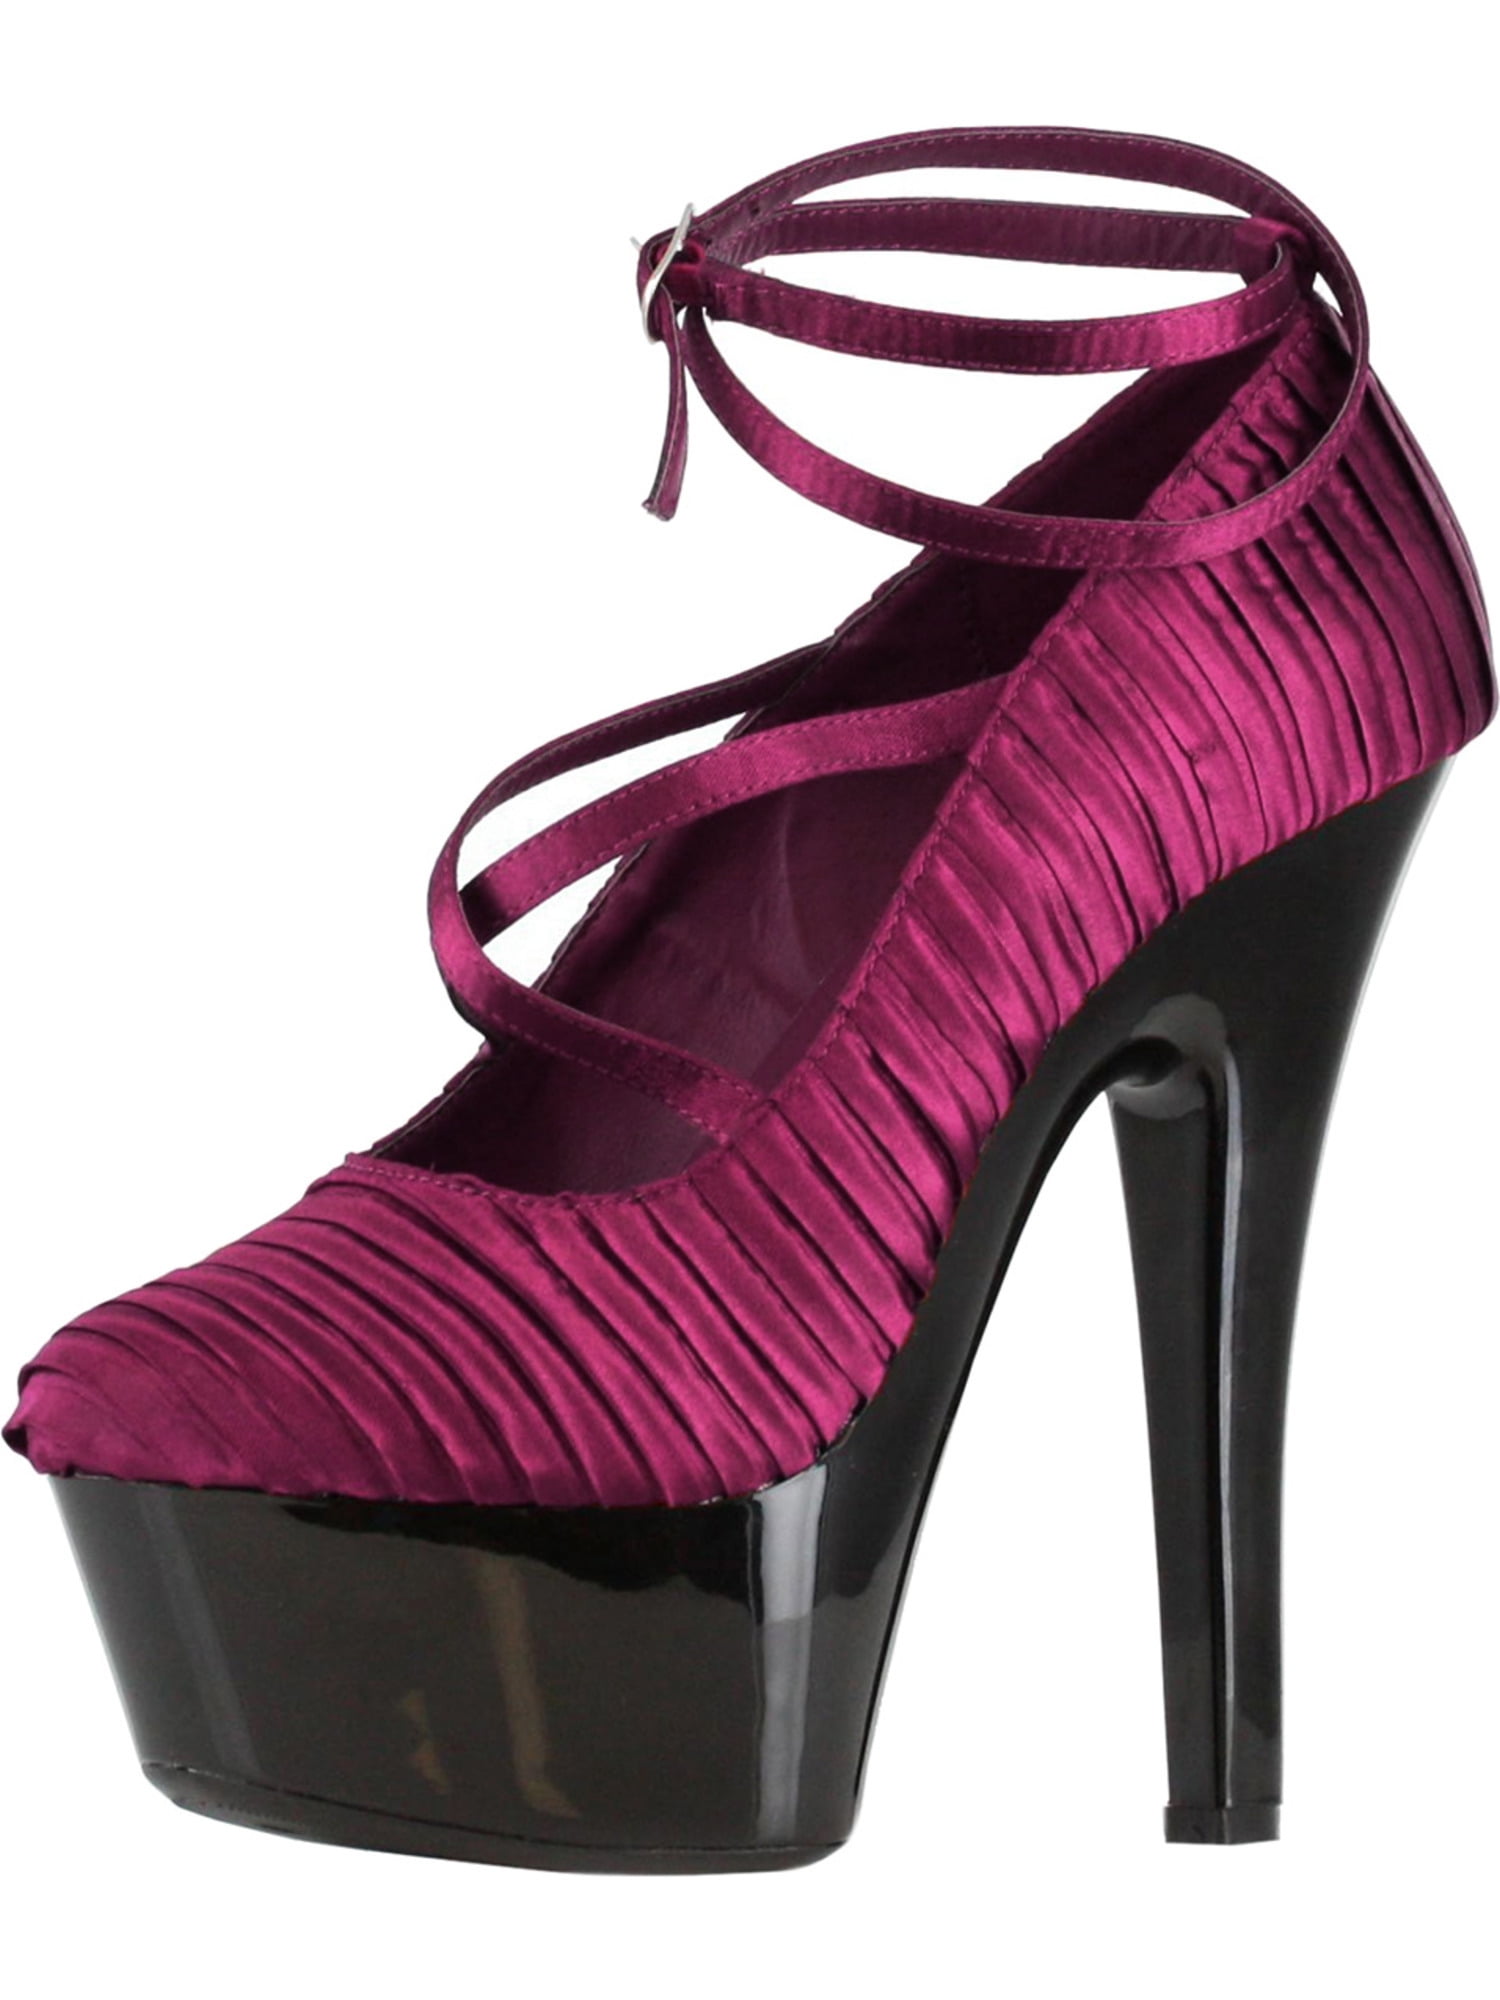 Summitfashions Womens 6 Inch Heel Strappy Platform Sandal Shoes 